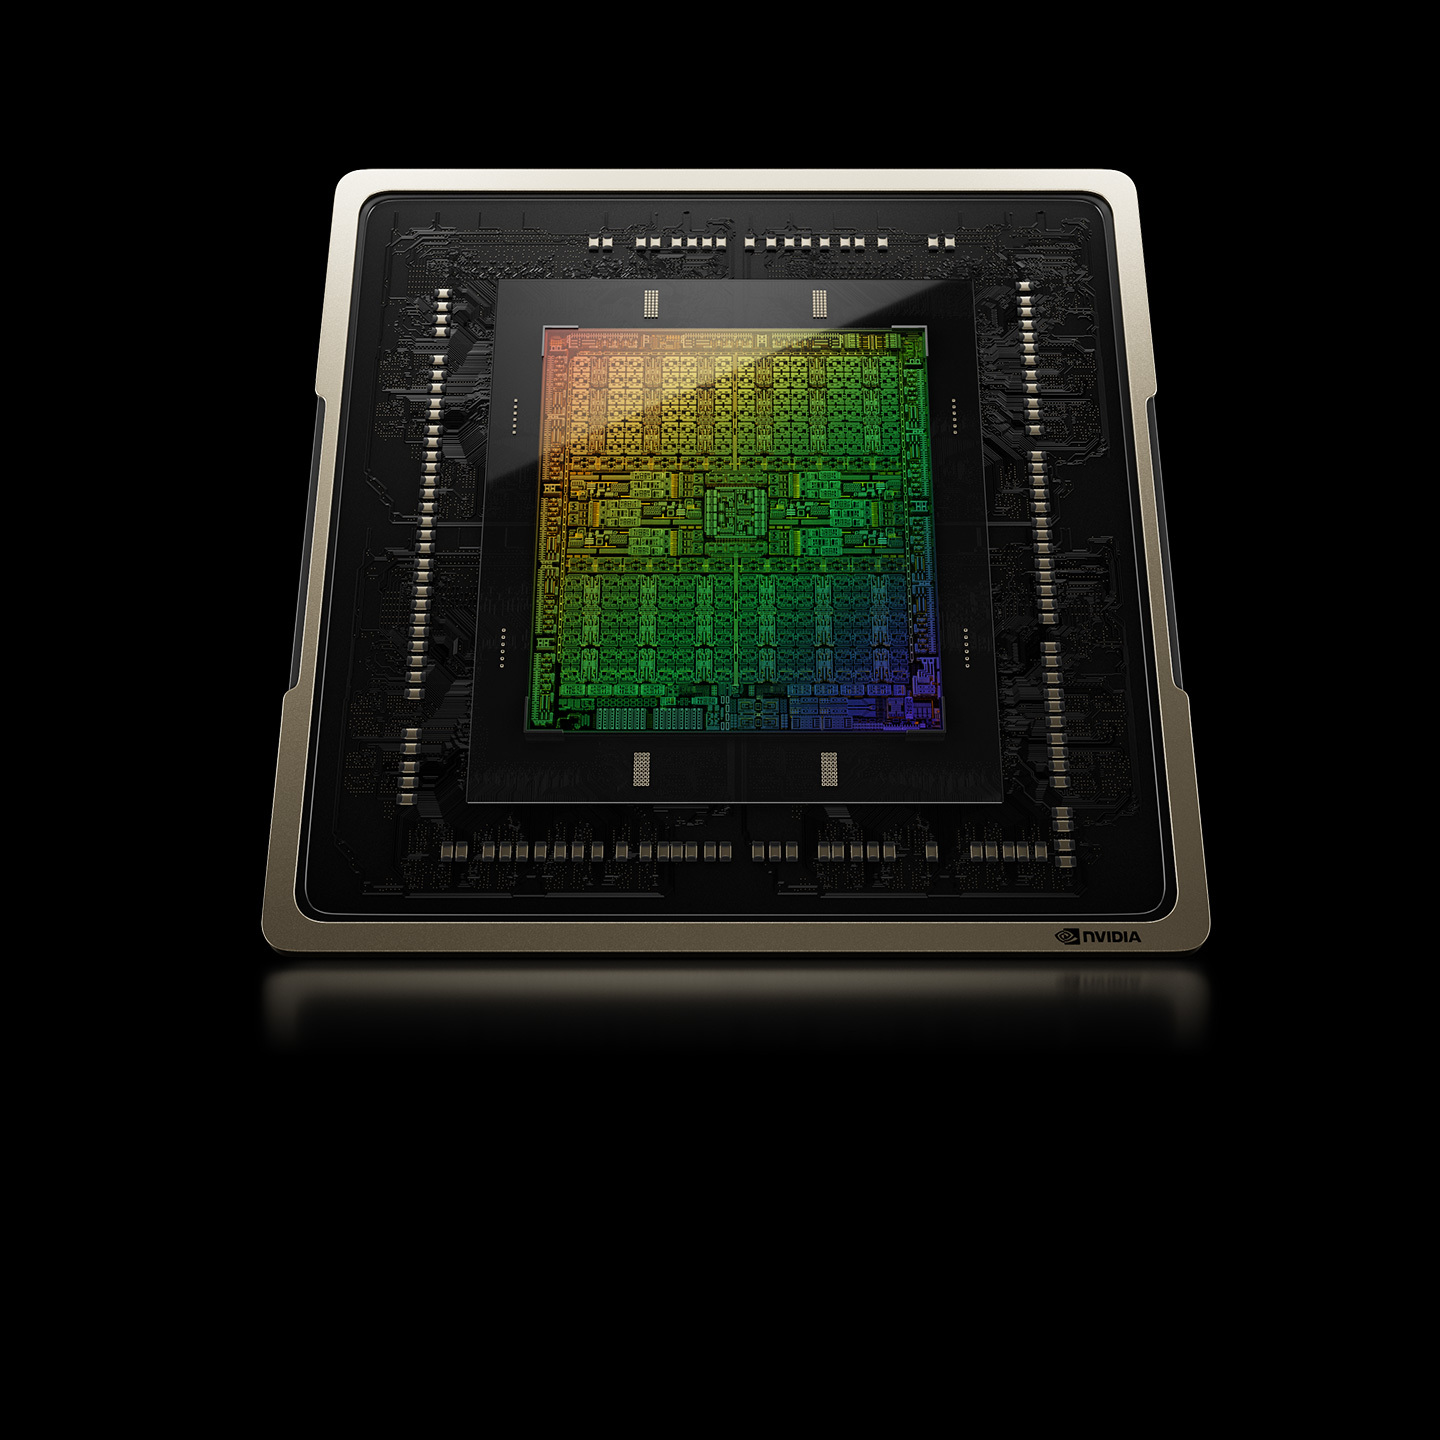 Nvidia GeForce RTX 4080 Ti release date incoming